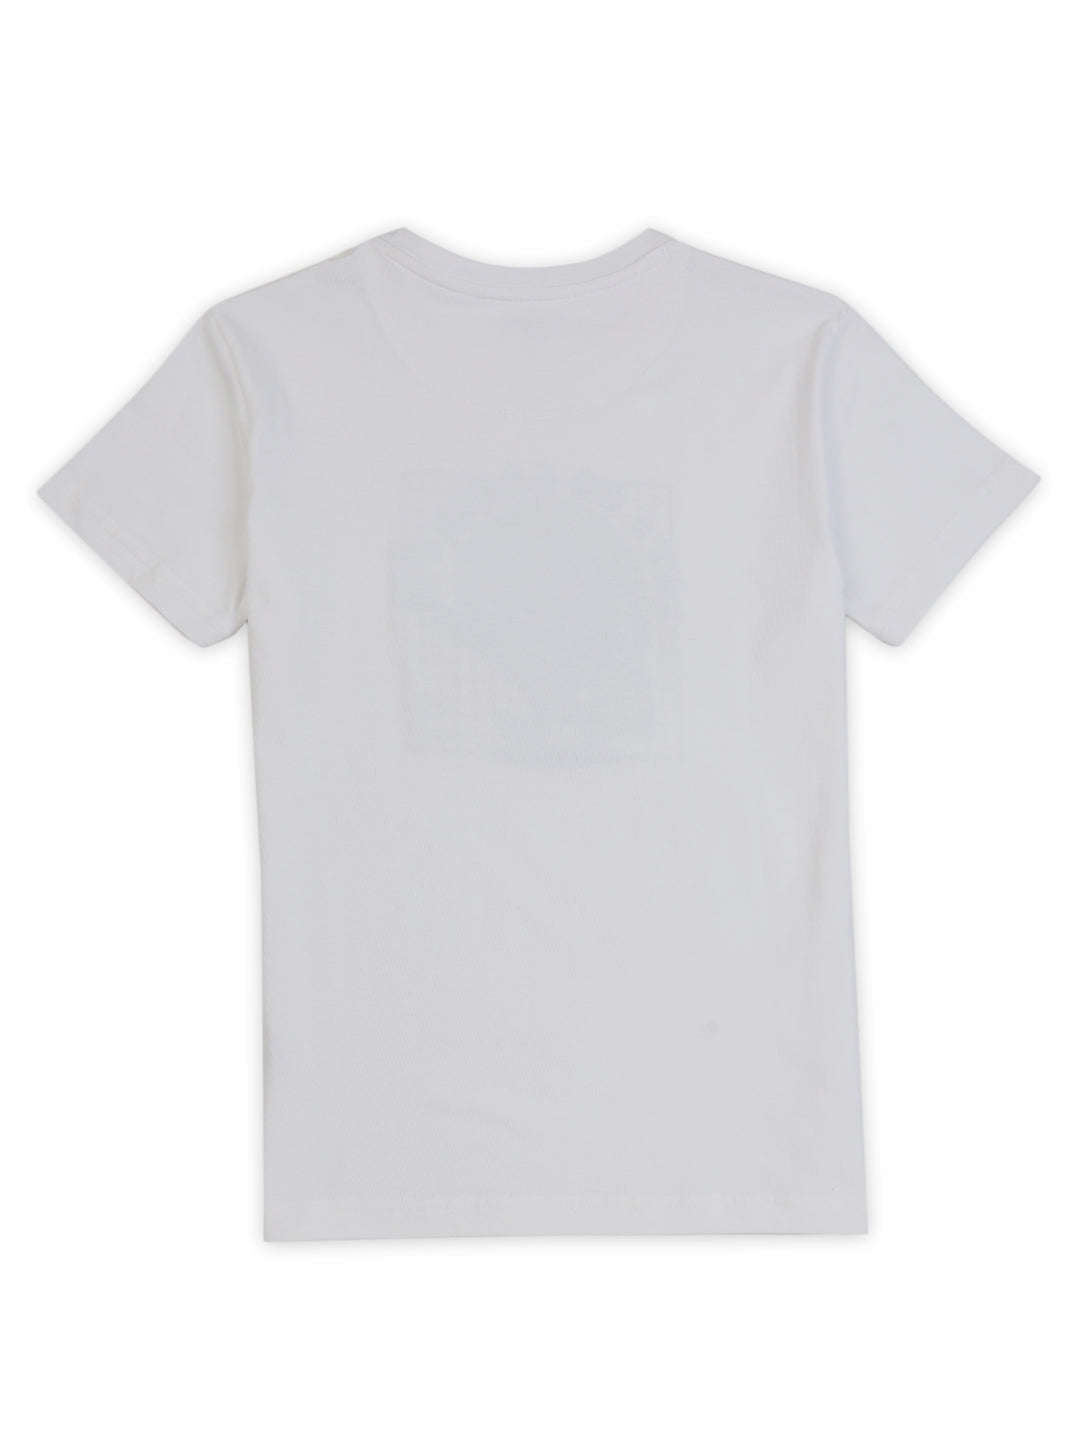 Boys White Printed  Cotton T-Shirt